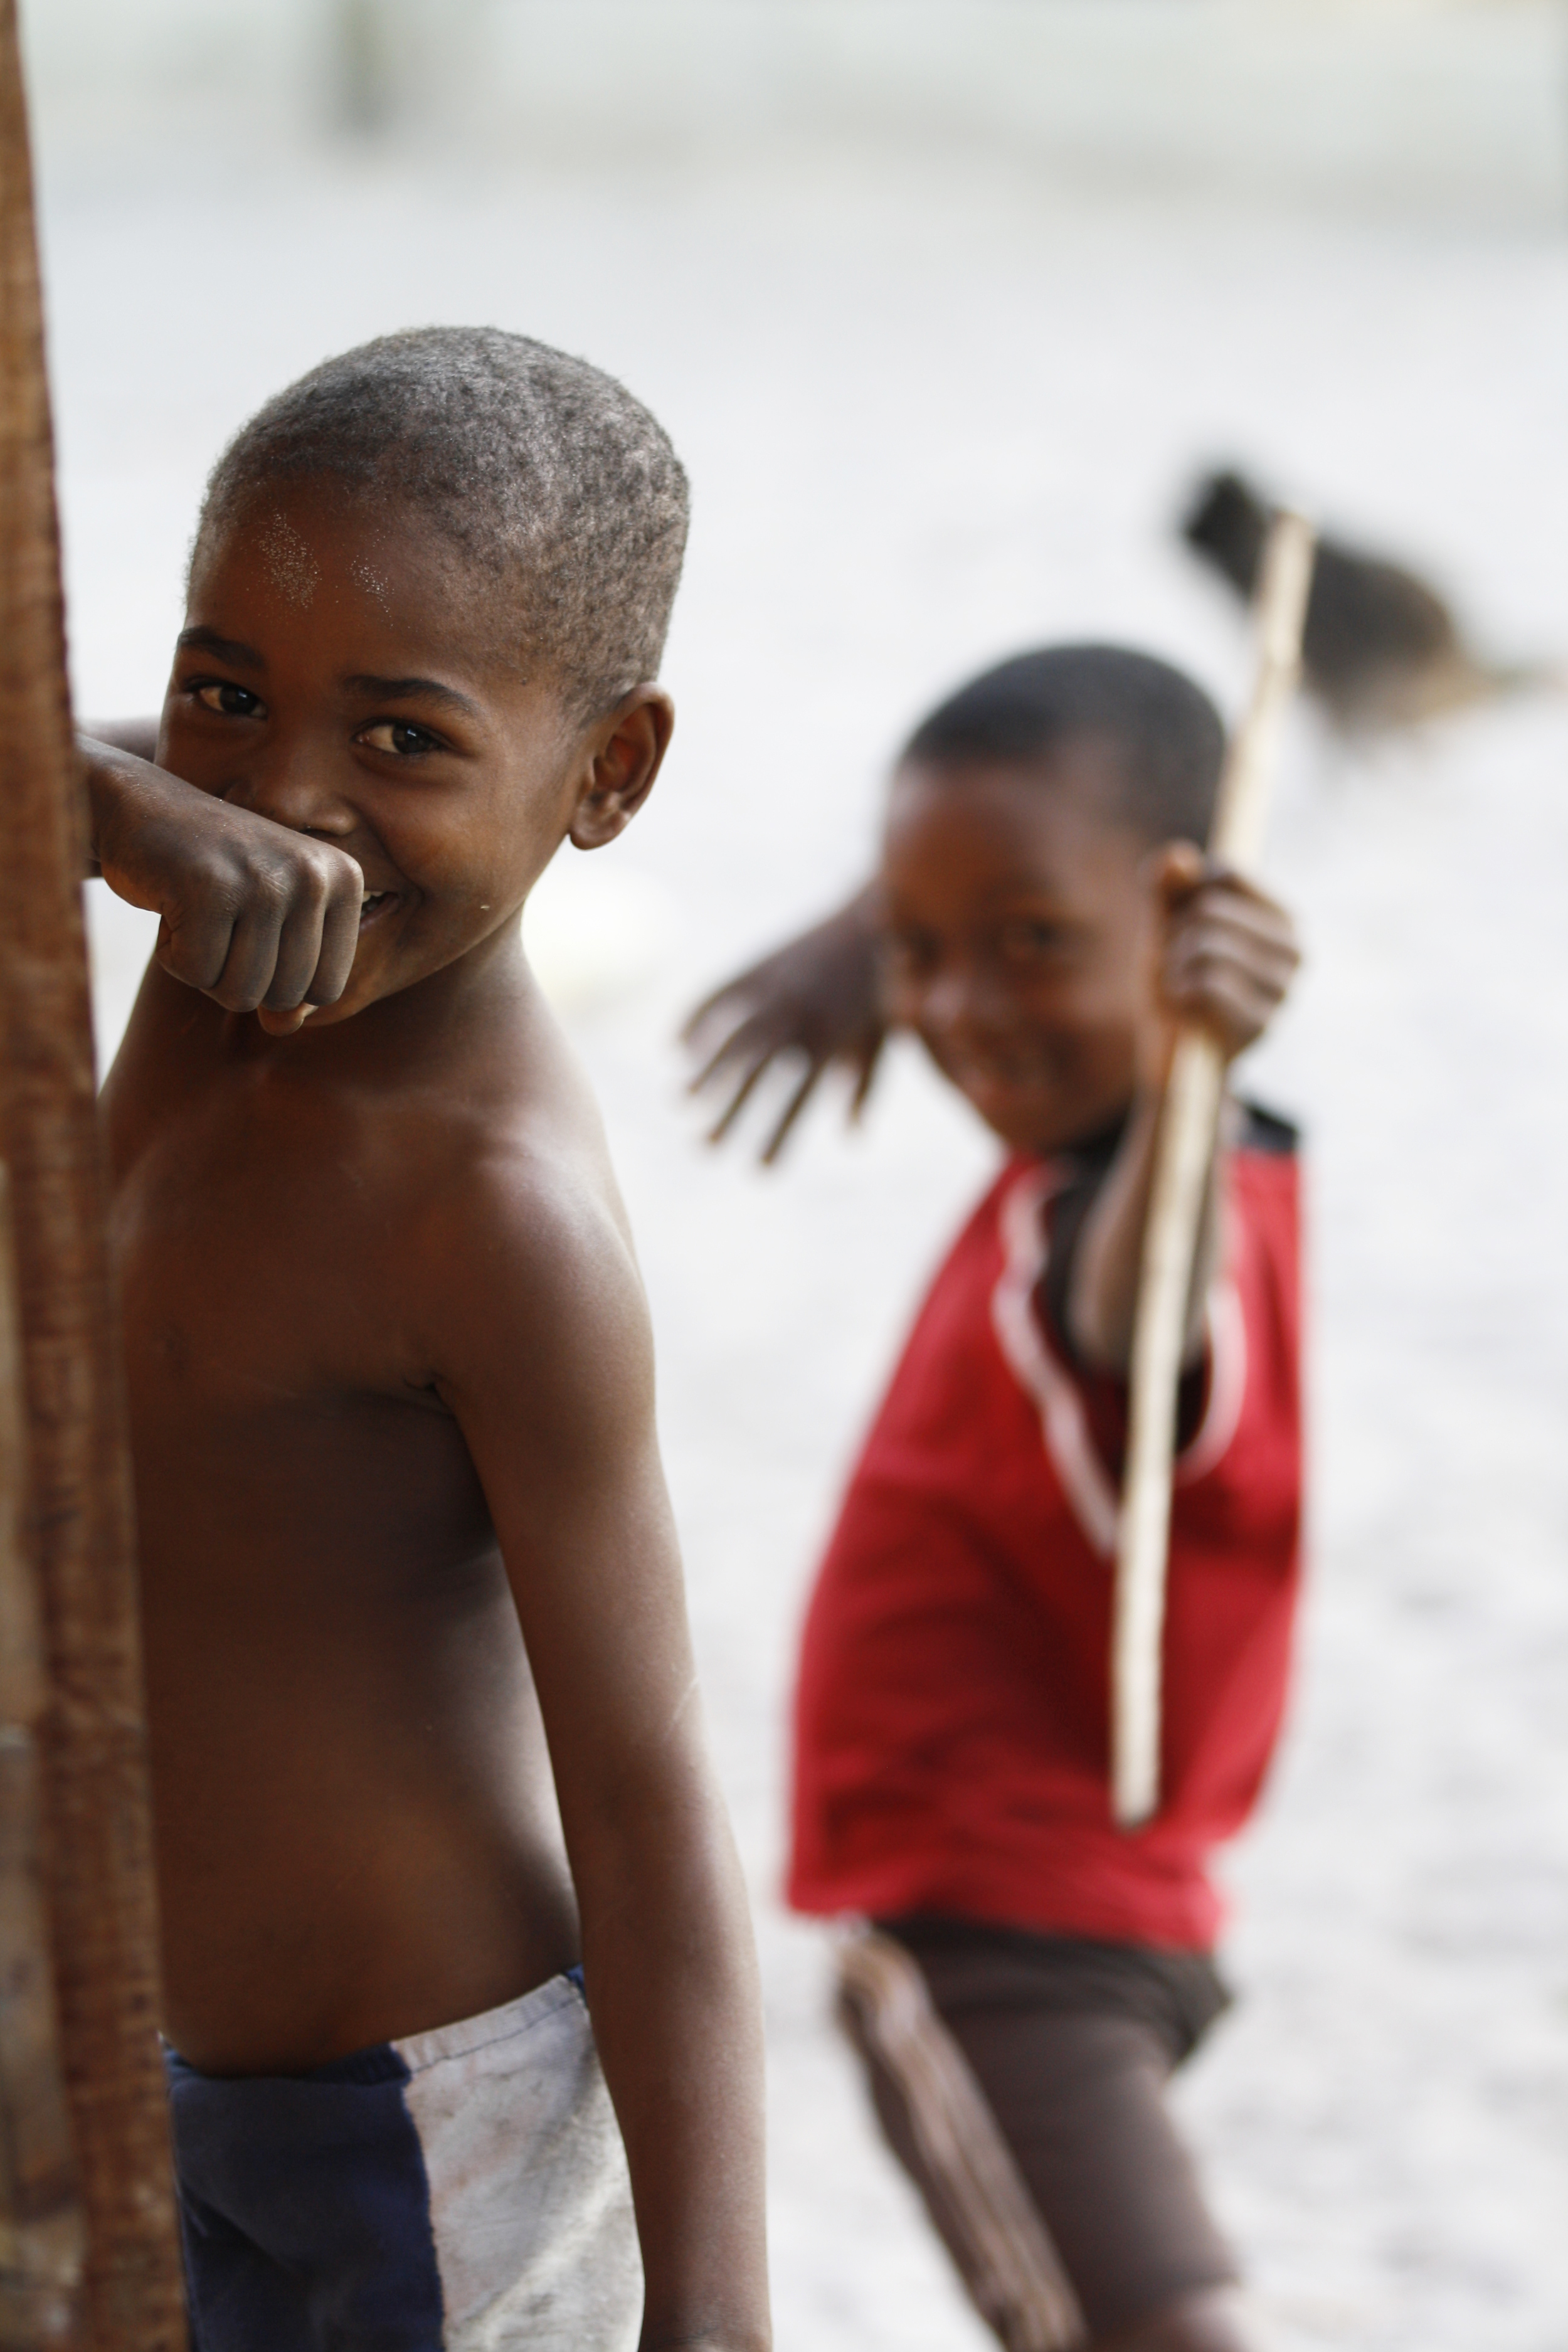  Young boys&nbsp;from Ambodivandrika (Vatomandry), Madagascar 